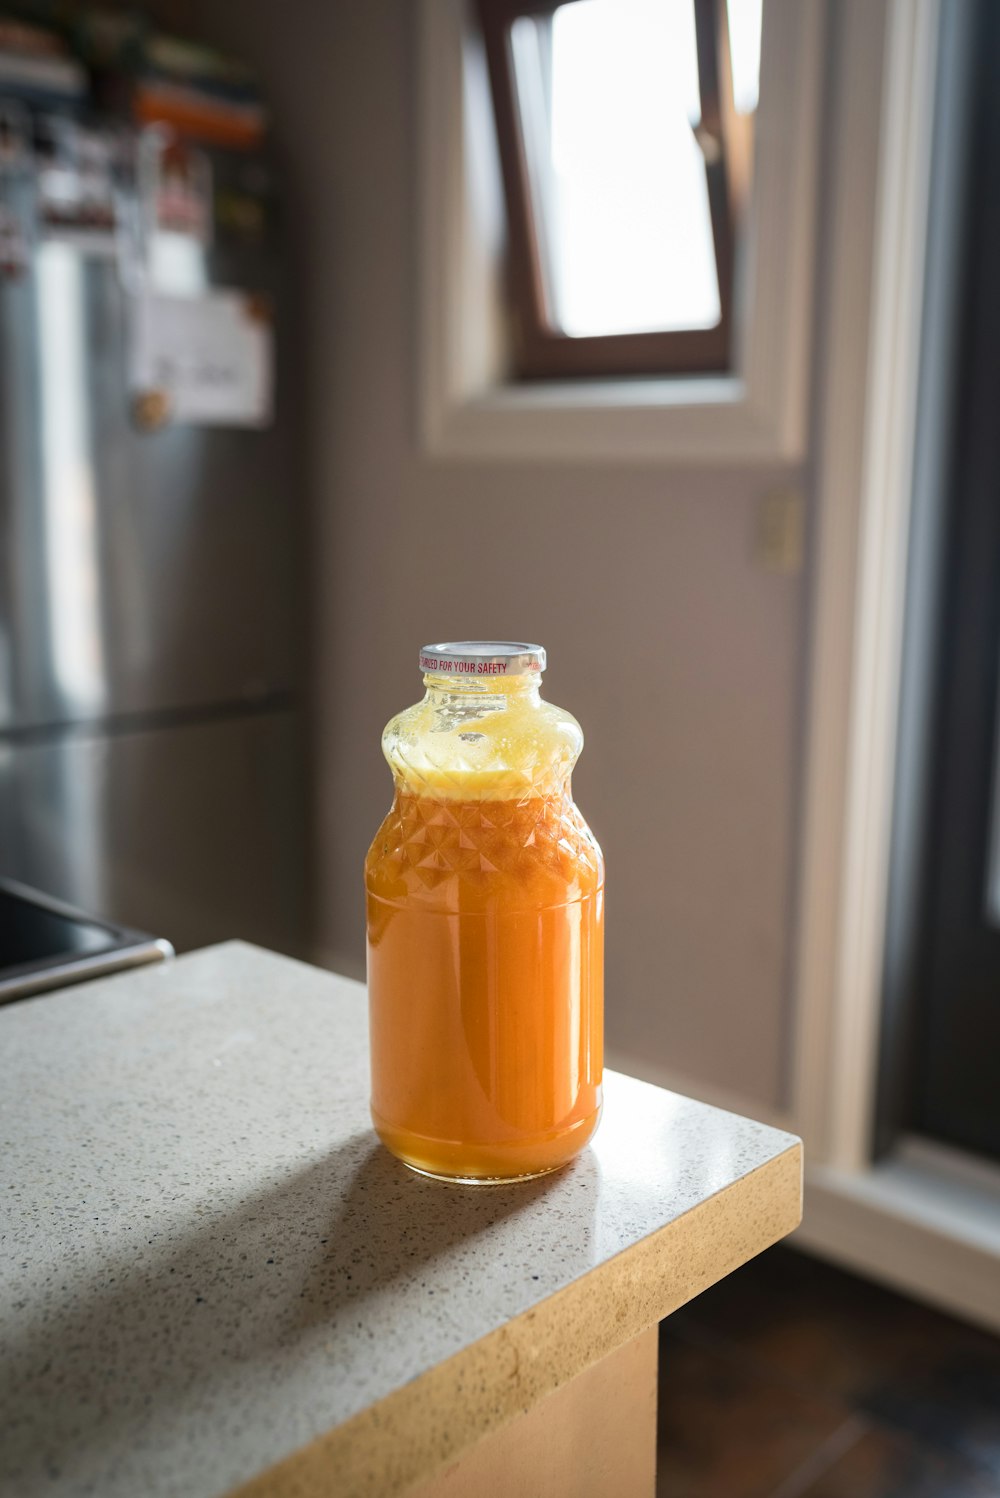 yellow liquid in clear glass jar